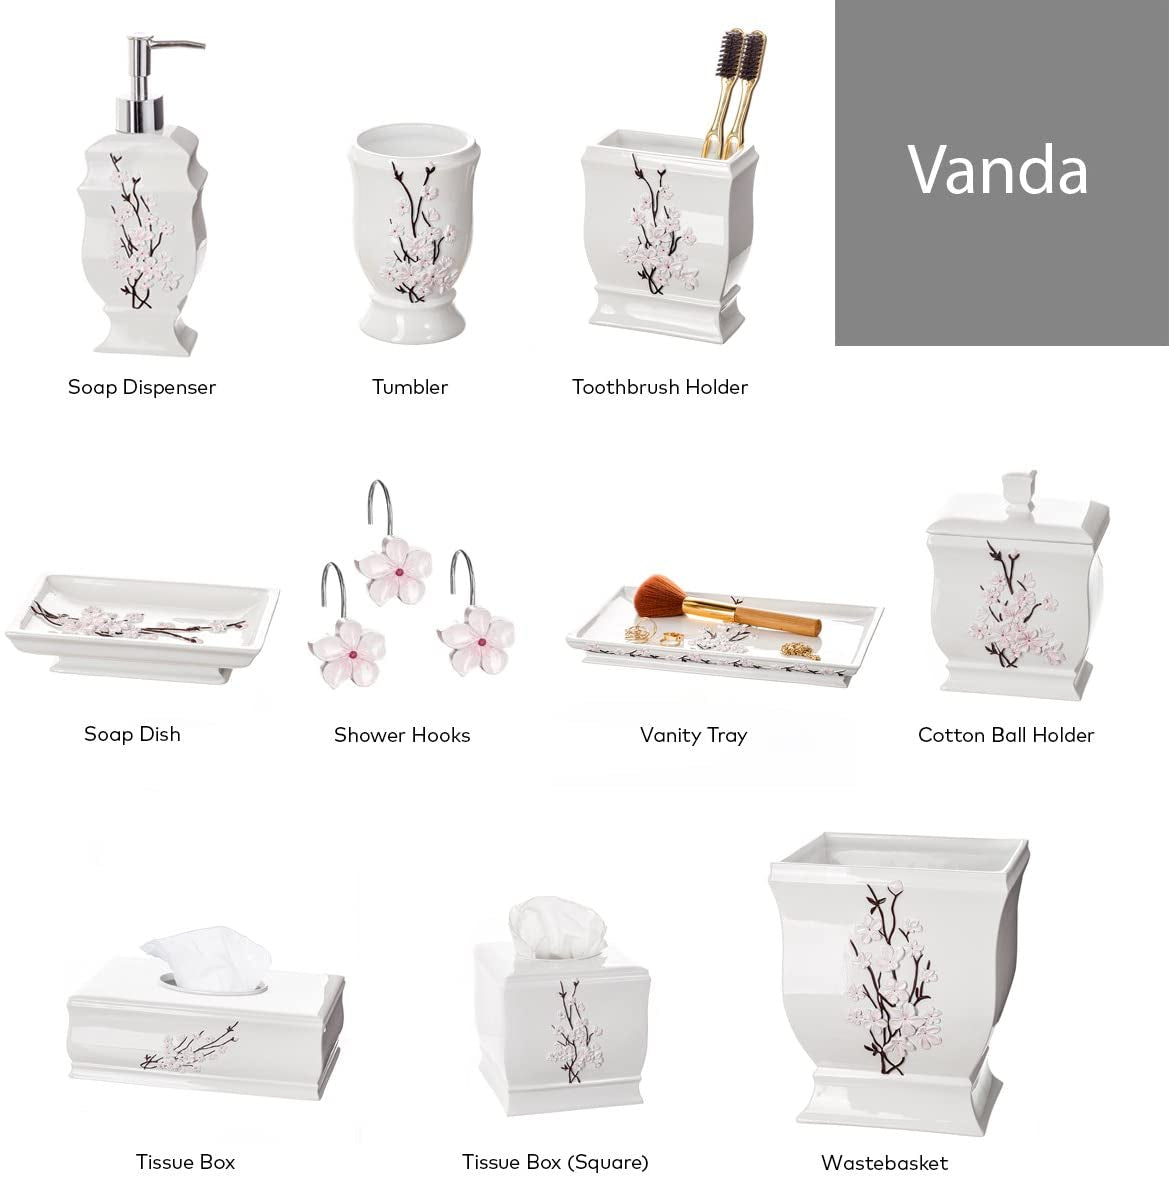 Modern Vanda Style Design White Soap Dispenser for Bathroom Countertop - Durable Pump Hand Lotion Dispenser for Liquid Soap by